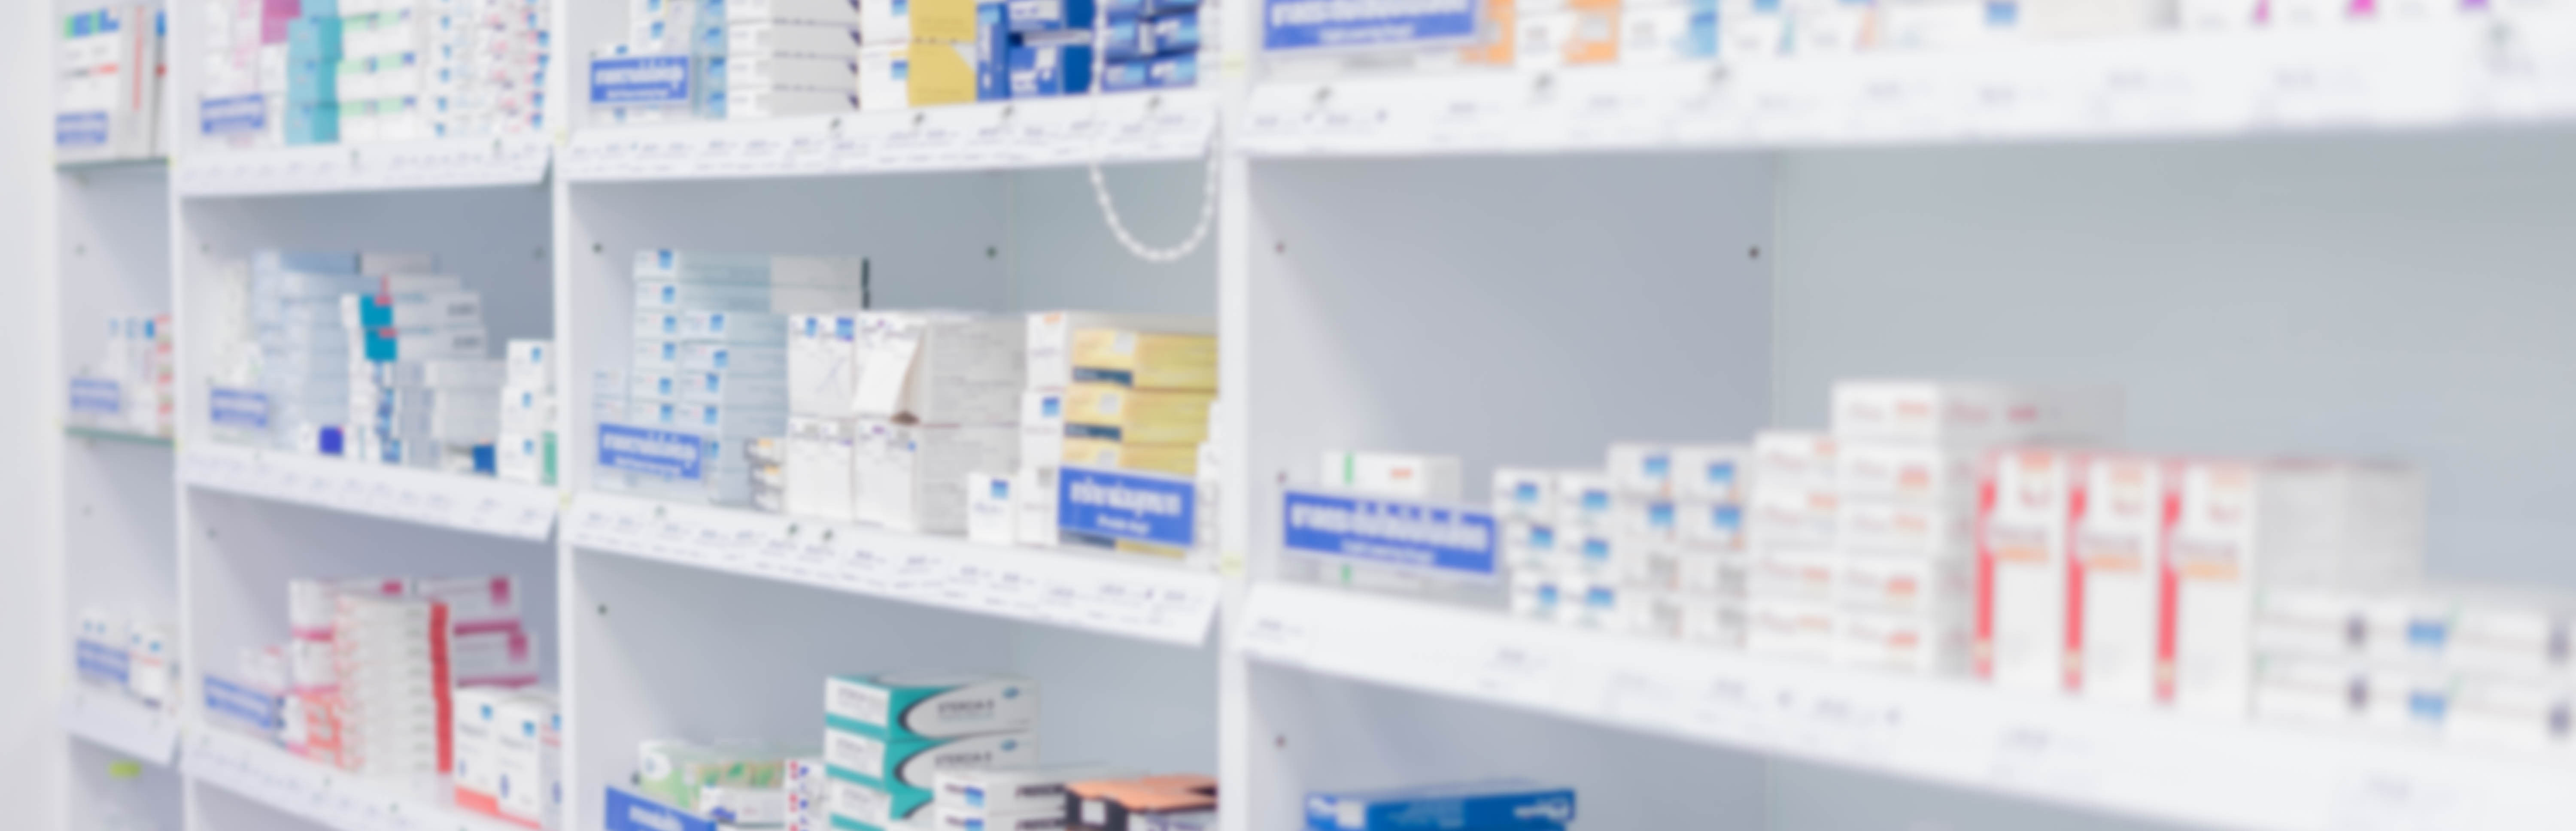 Pharmacy shelf with prescription drugs